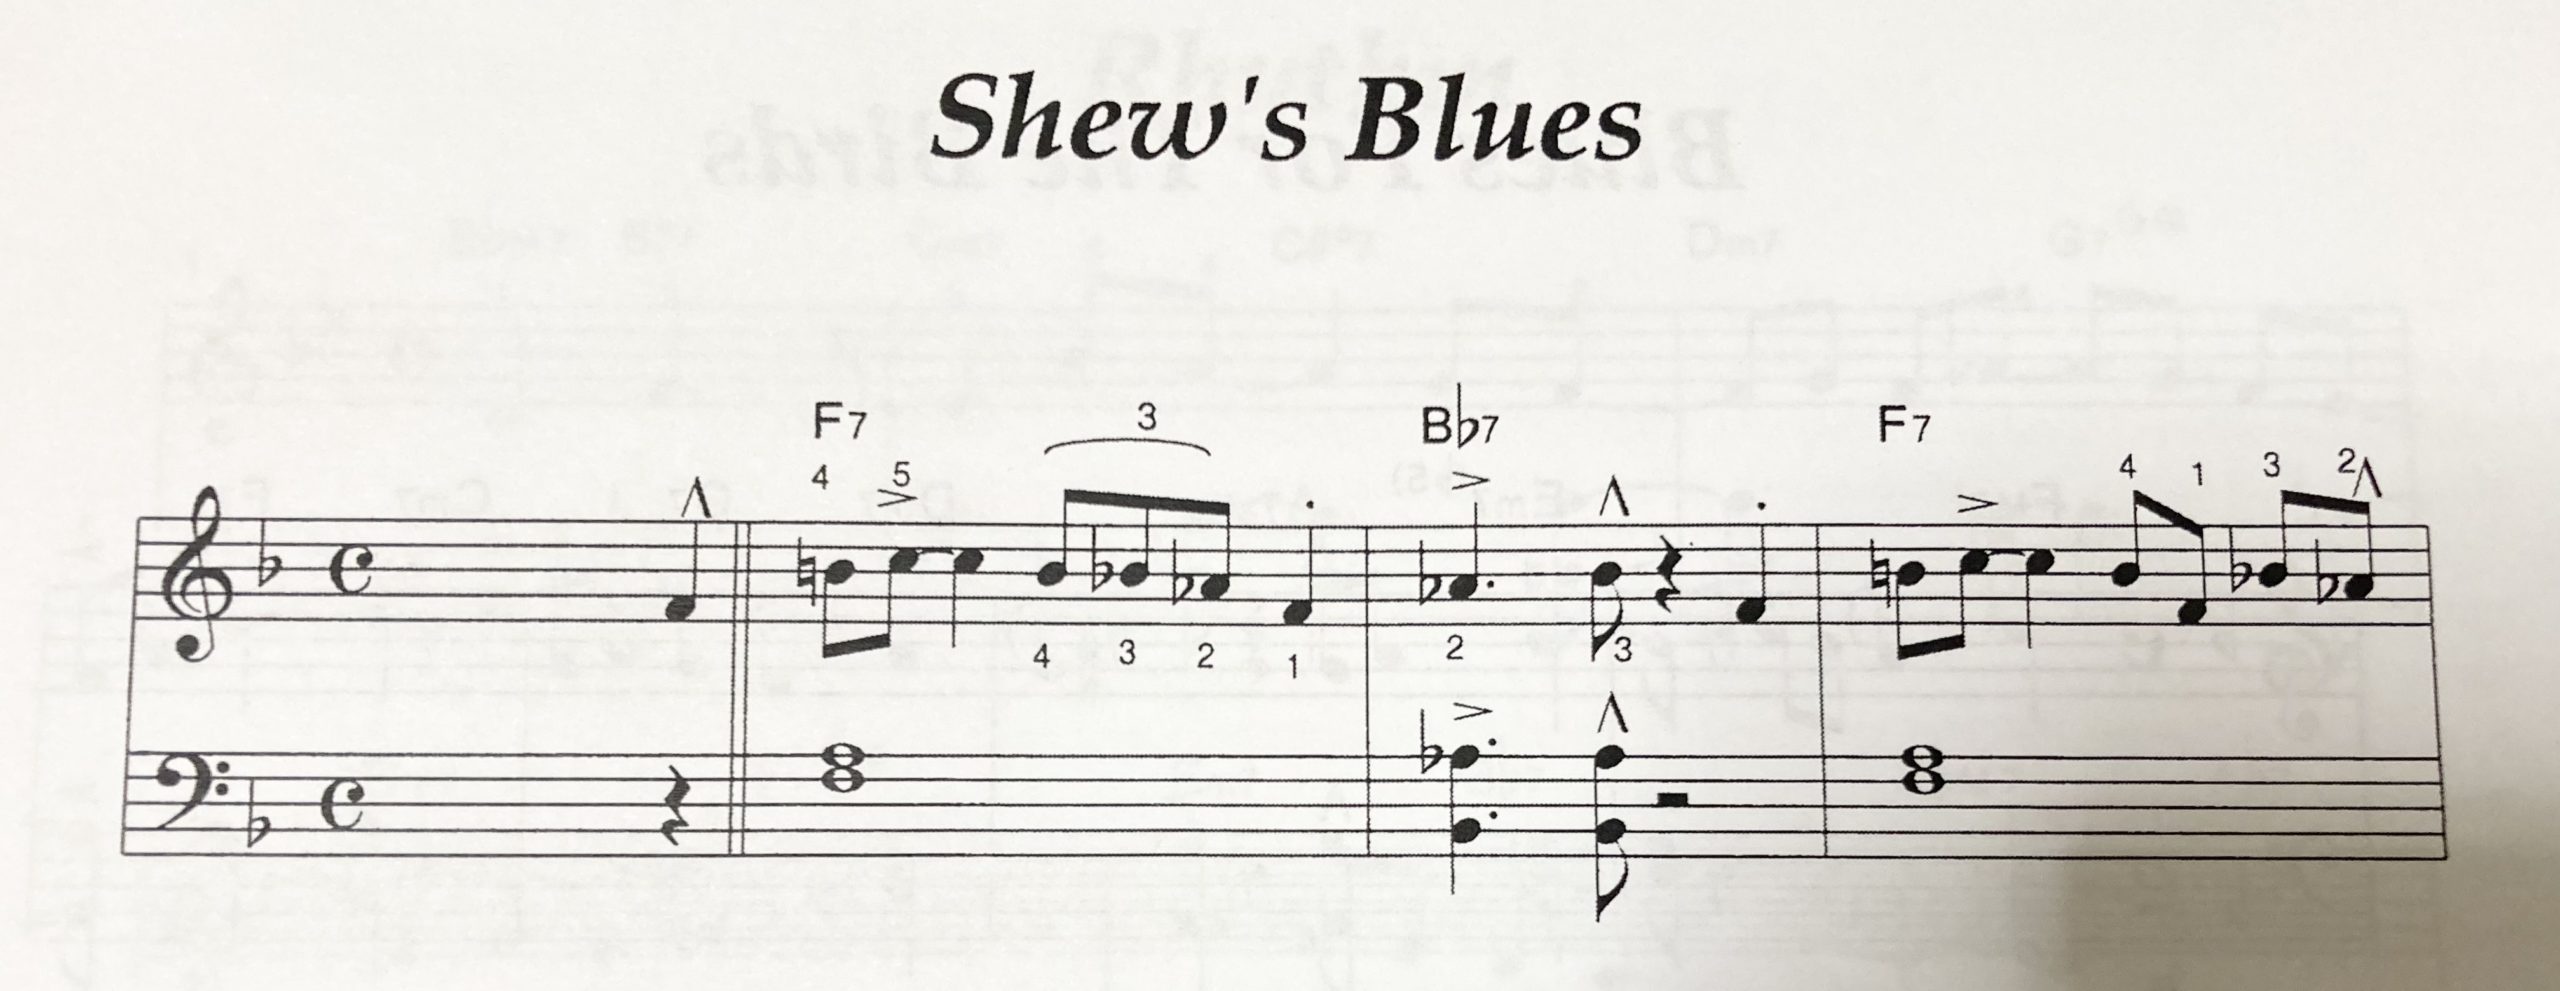 Shew's Blues